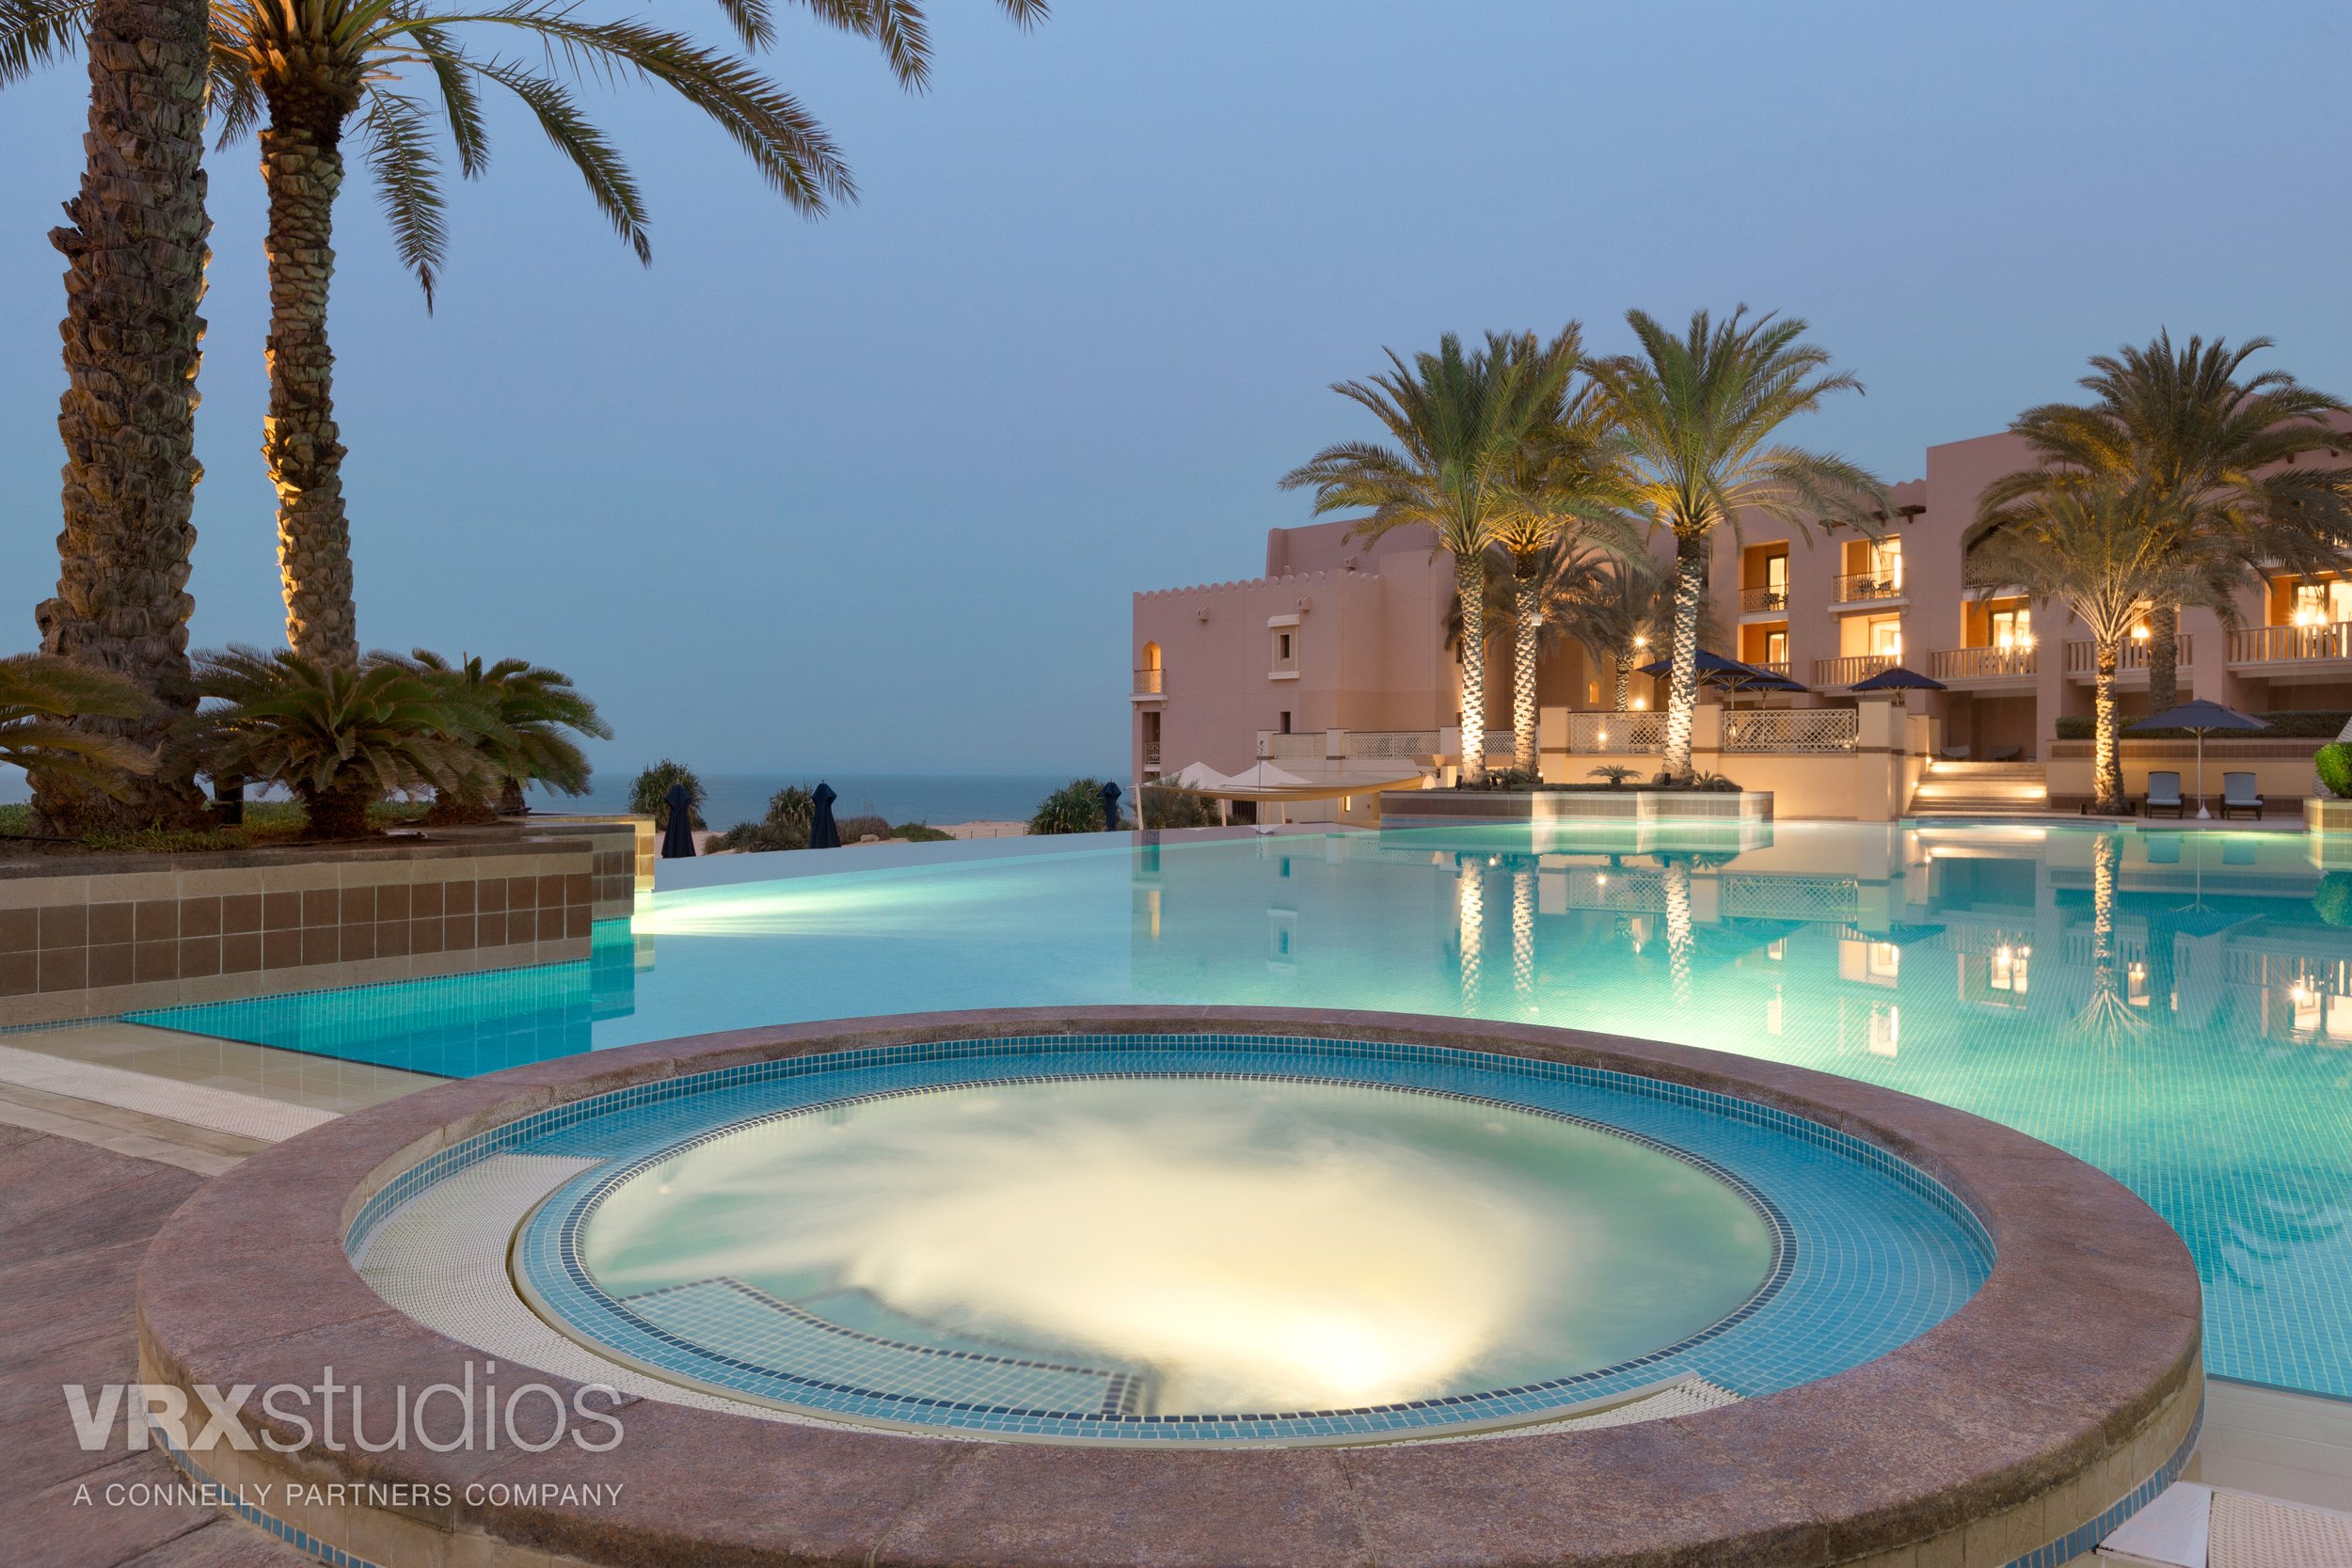  Client: VRX Studios • Project: Shangri-La Al Husn Resort and Spa, Oman • Photographer: Marcelo Barbosa • Produced by: VRX Studios 21/01/2020 